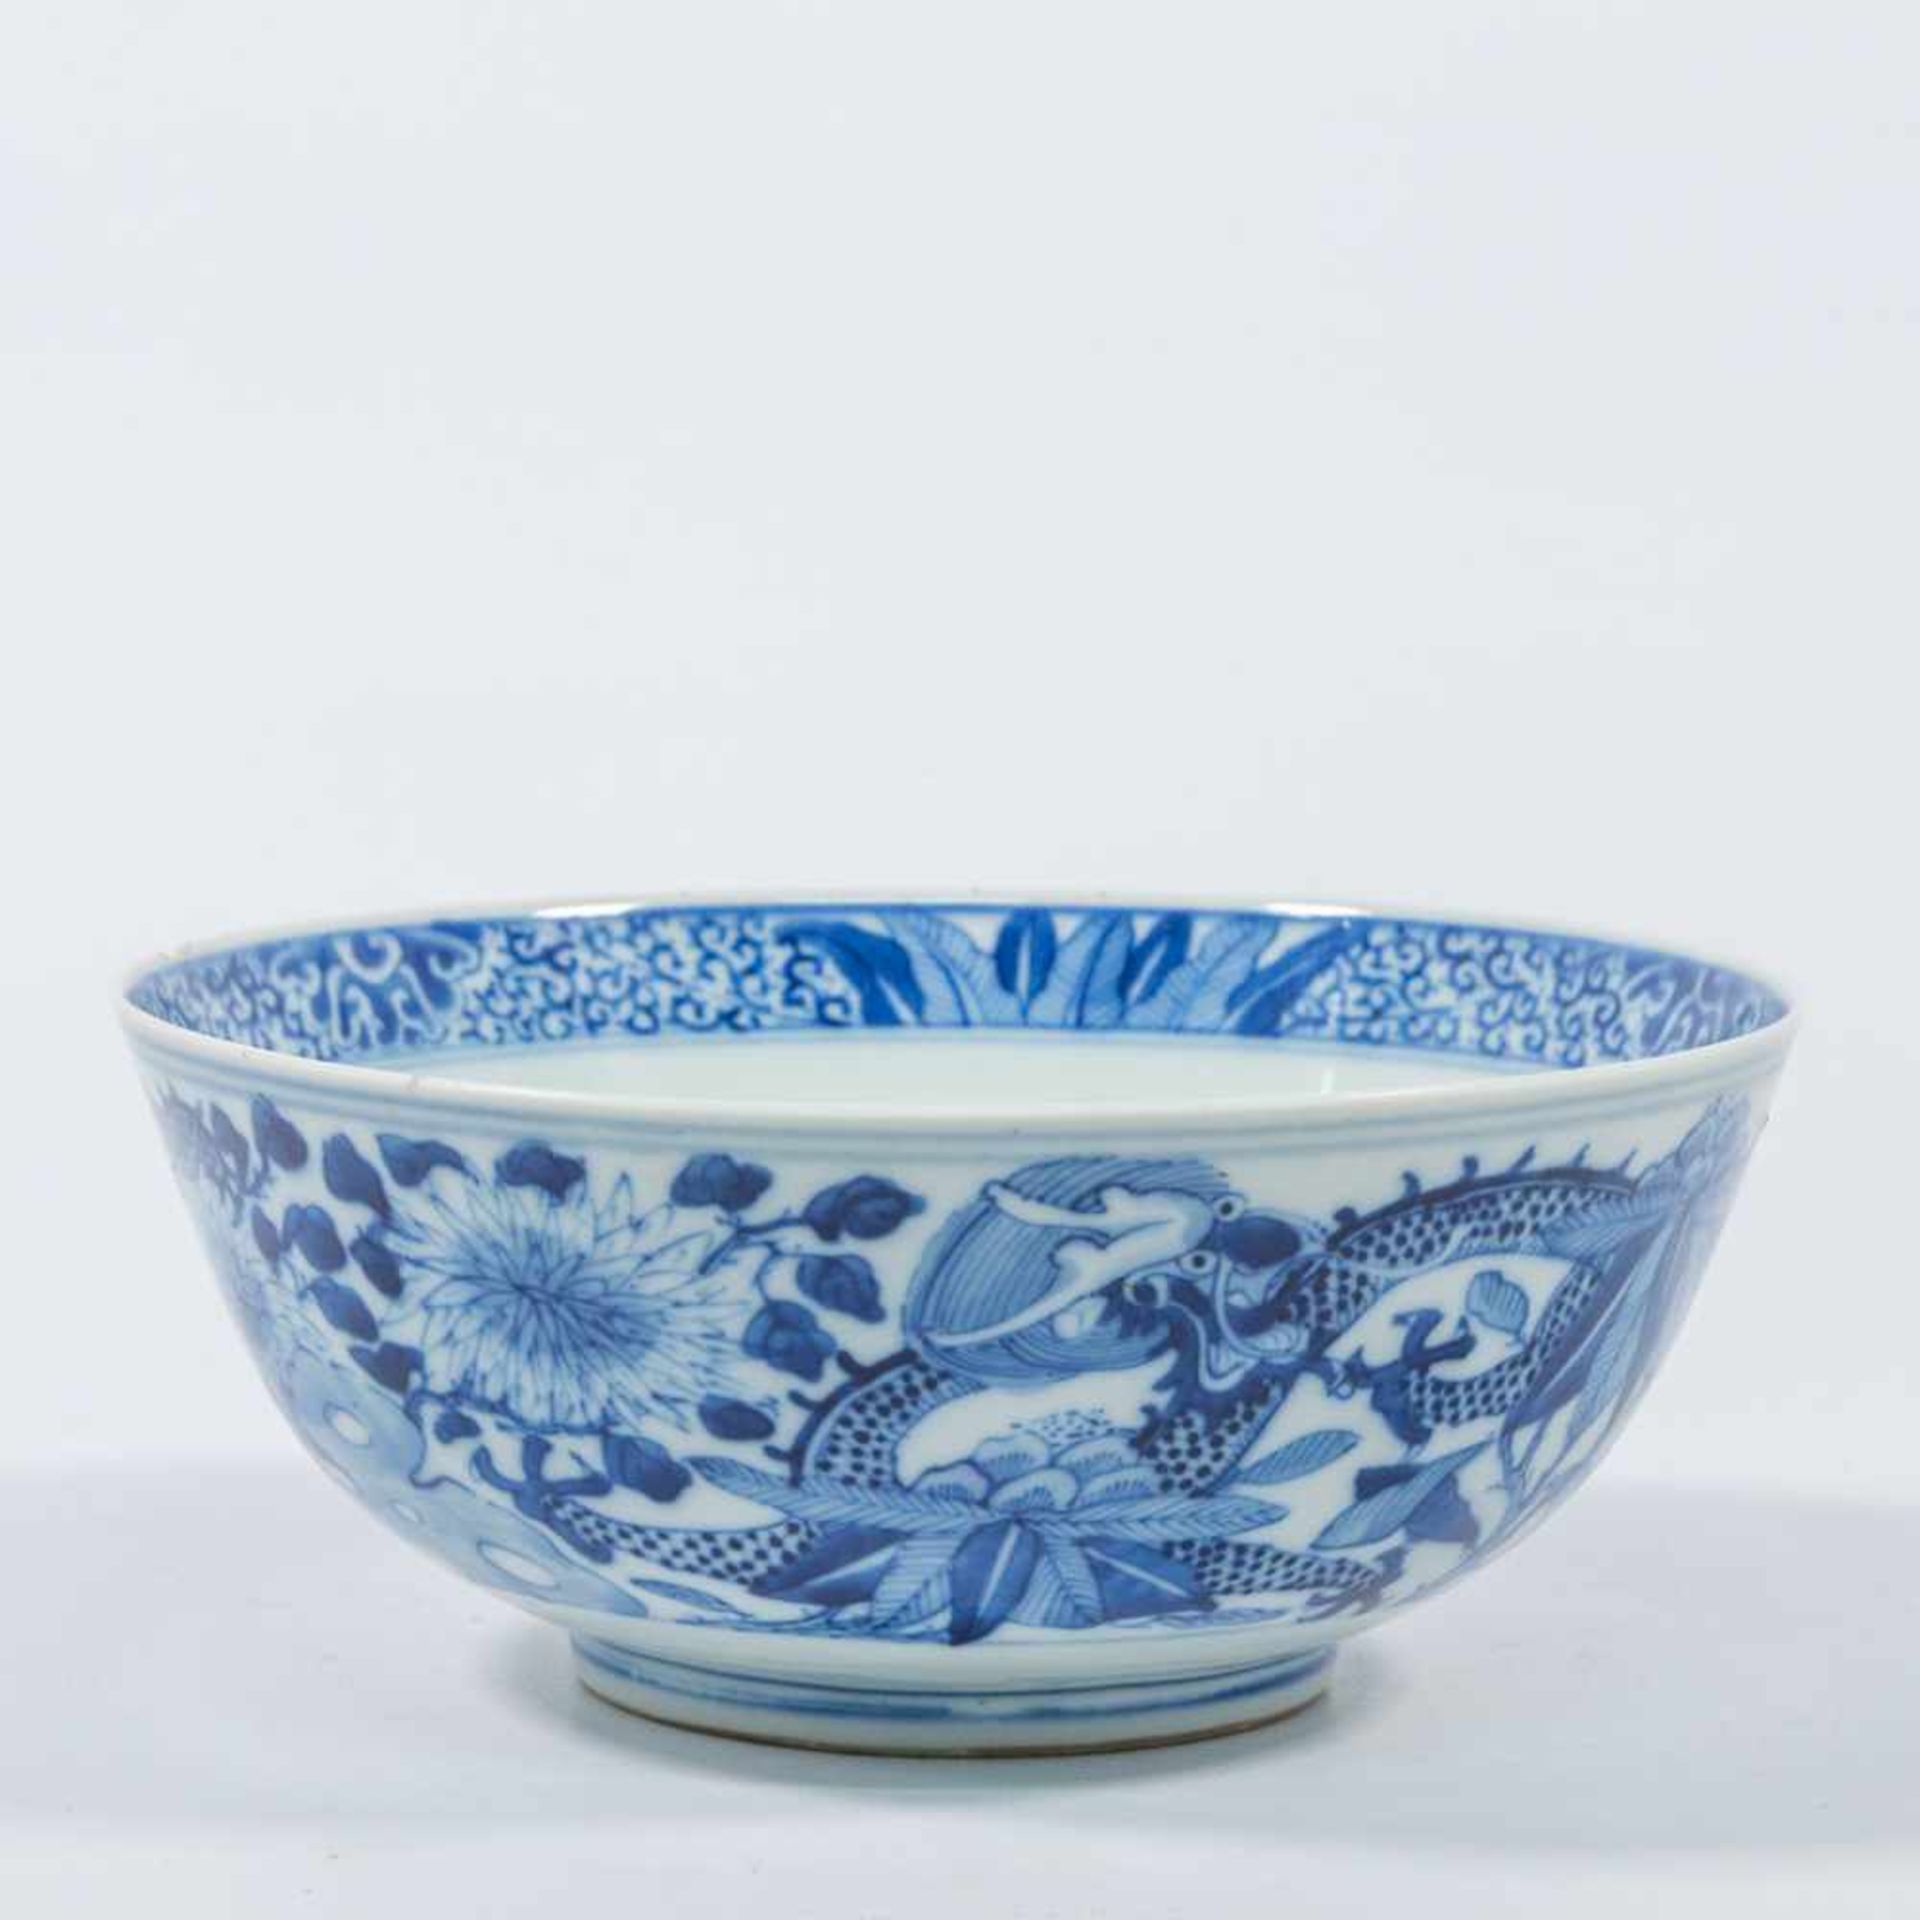 Chines bowl